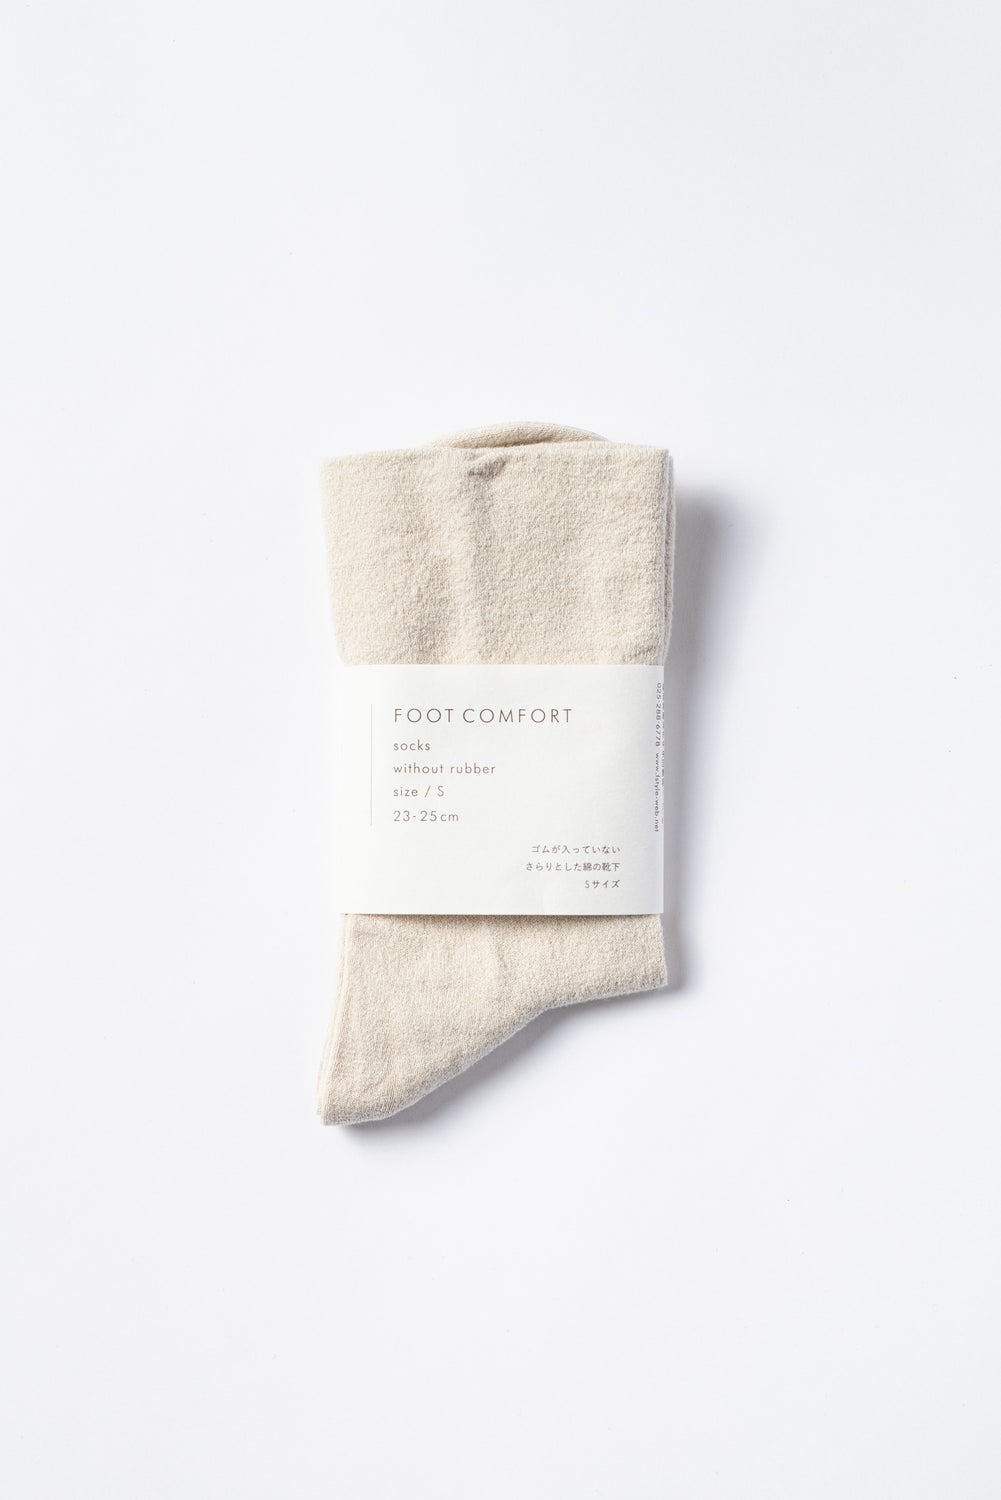 Foot Comfort Socks, Ivory